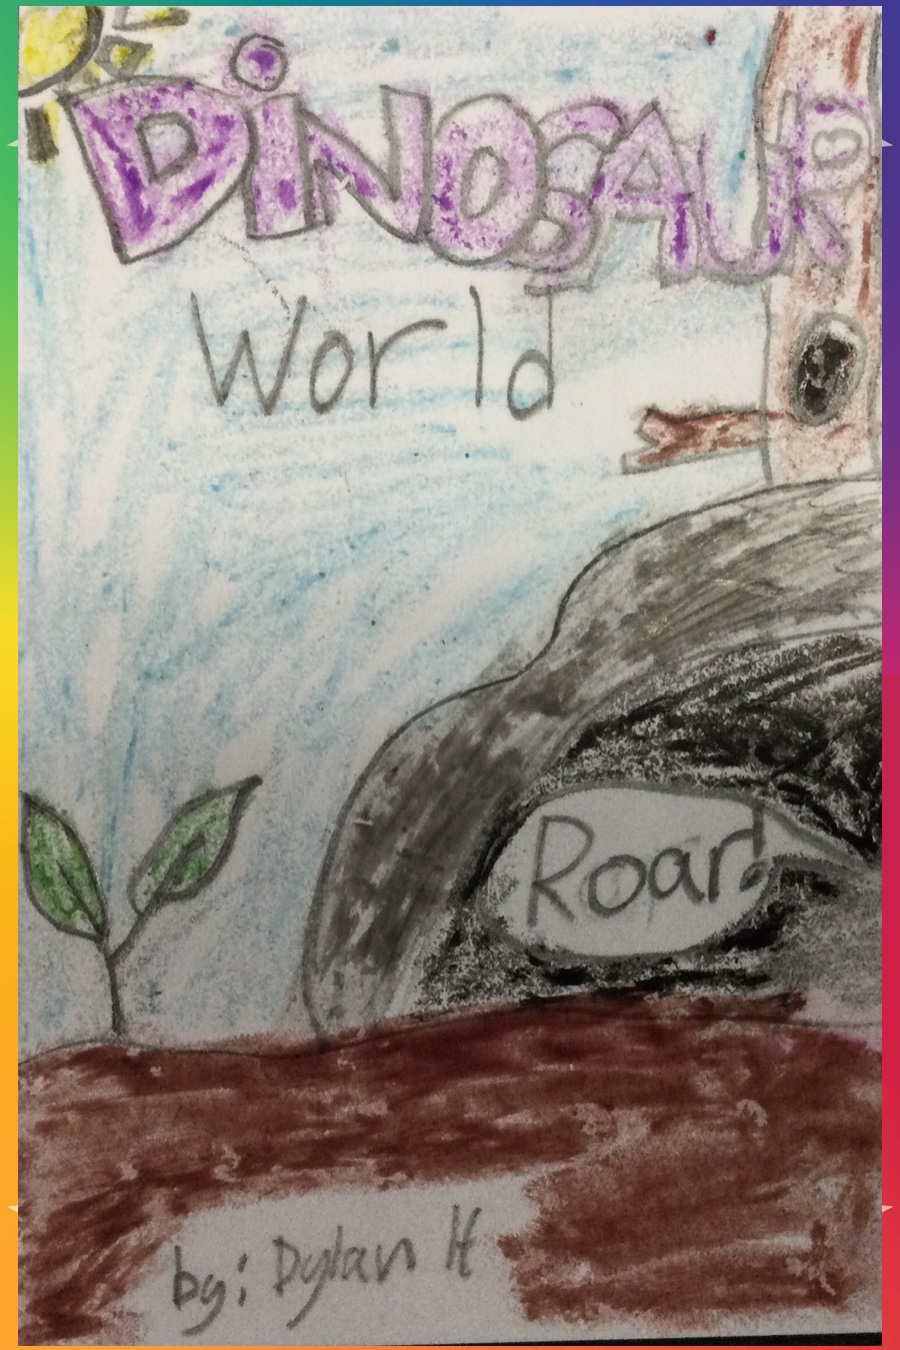 Dinosaur World by Dylan H